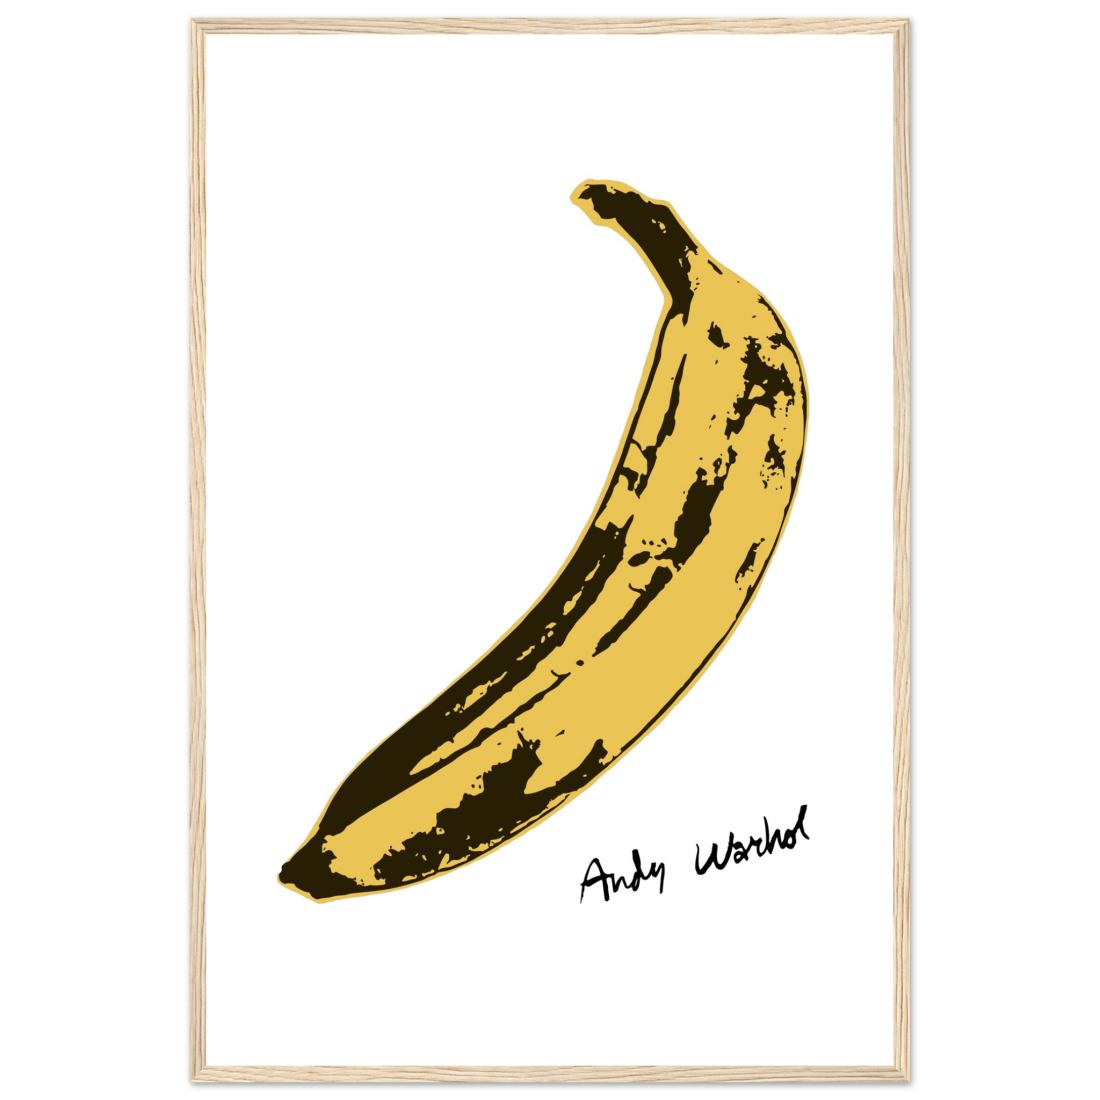 Andy Warhol's Banana, 1967 Pop Art Poster-13